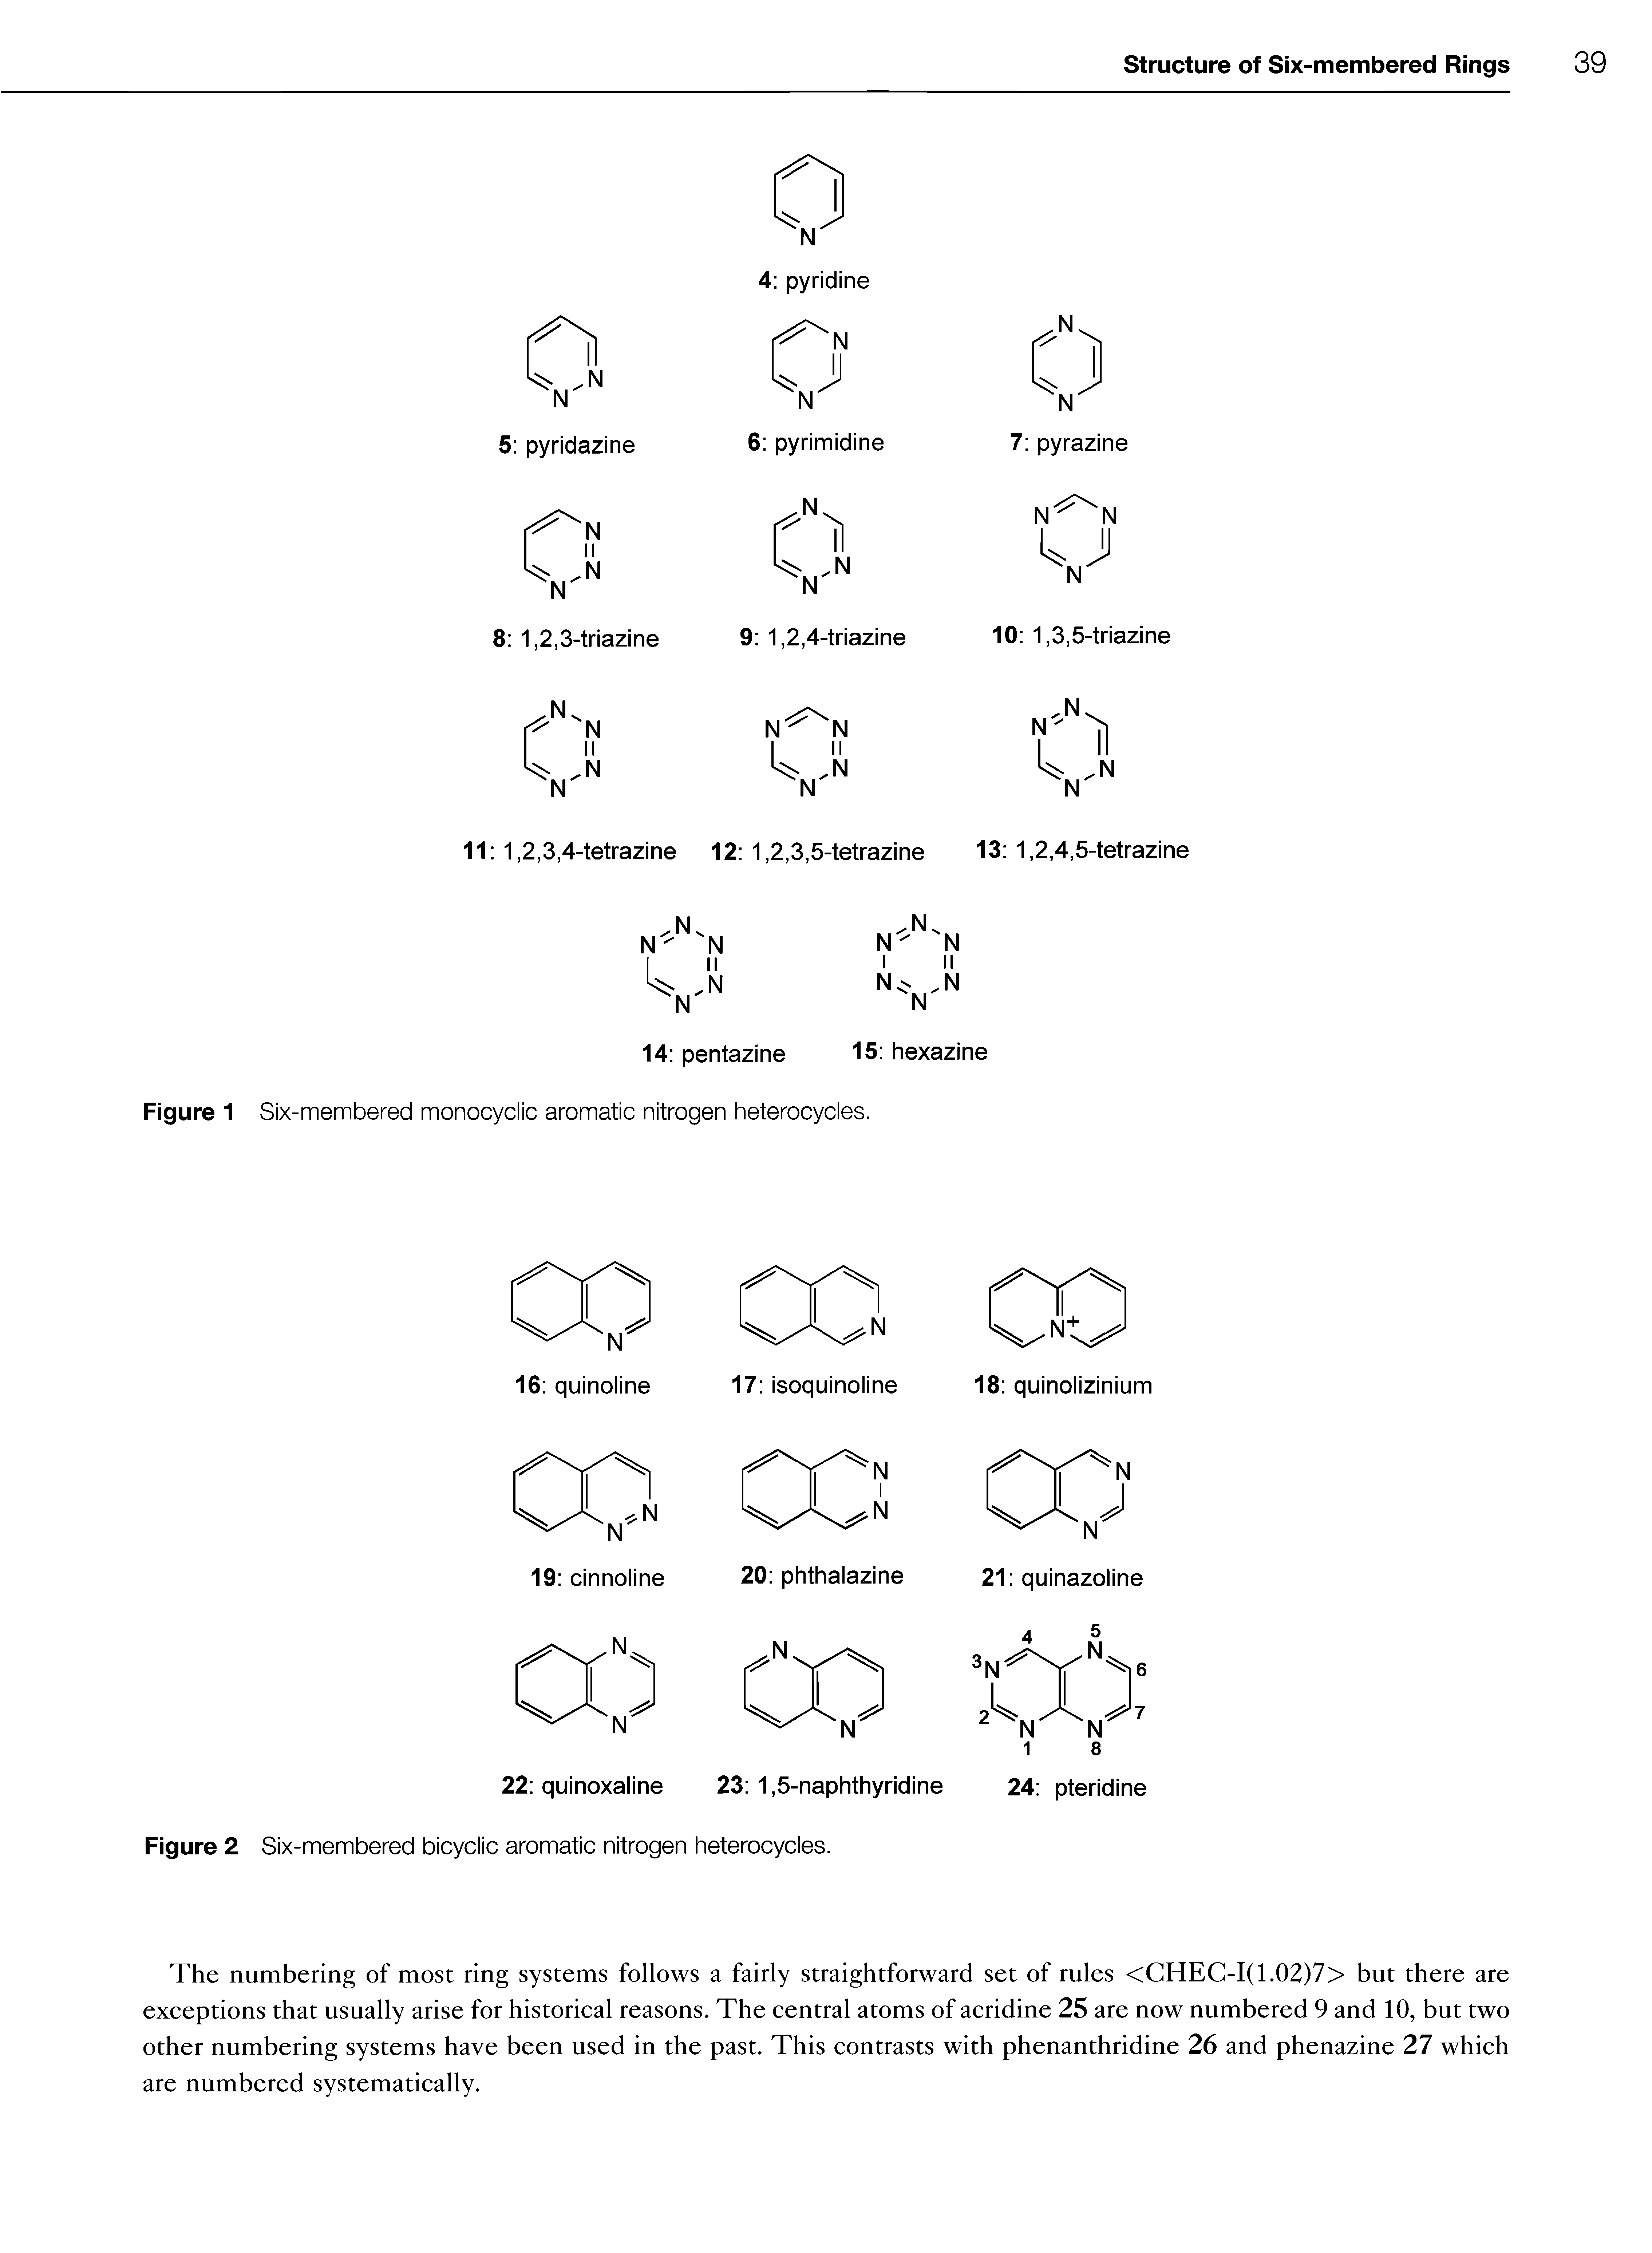 Figure 2 Six-membered bicyclic aromatic nitrogen heterocycles.